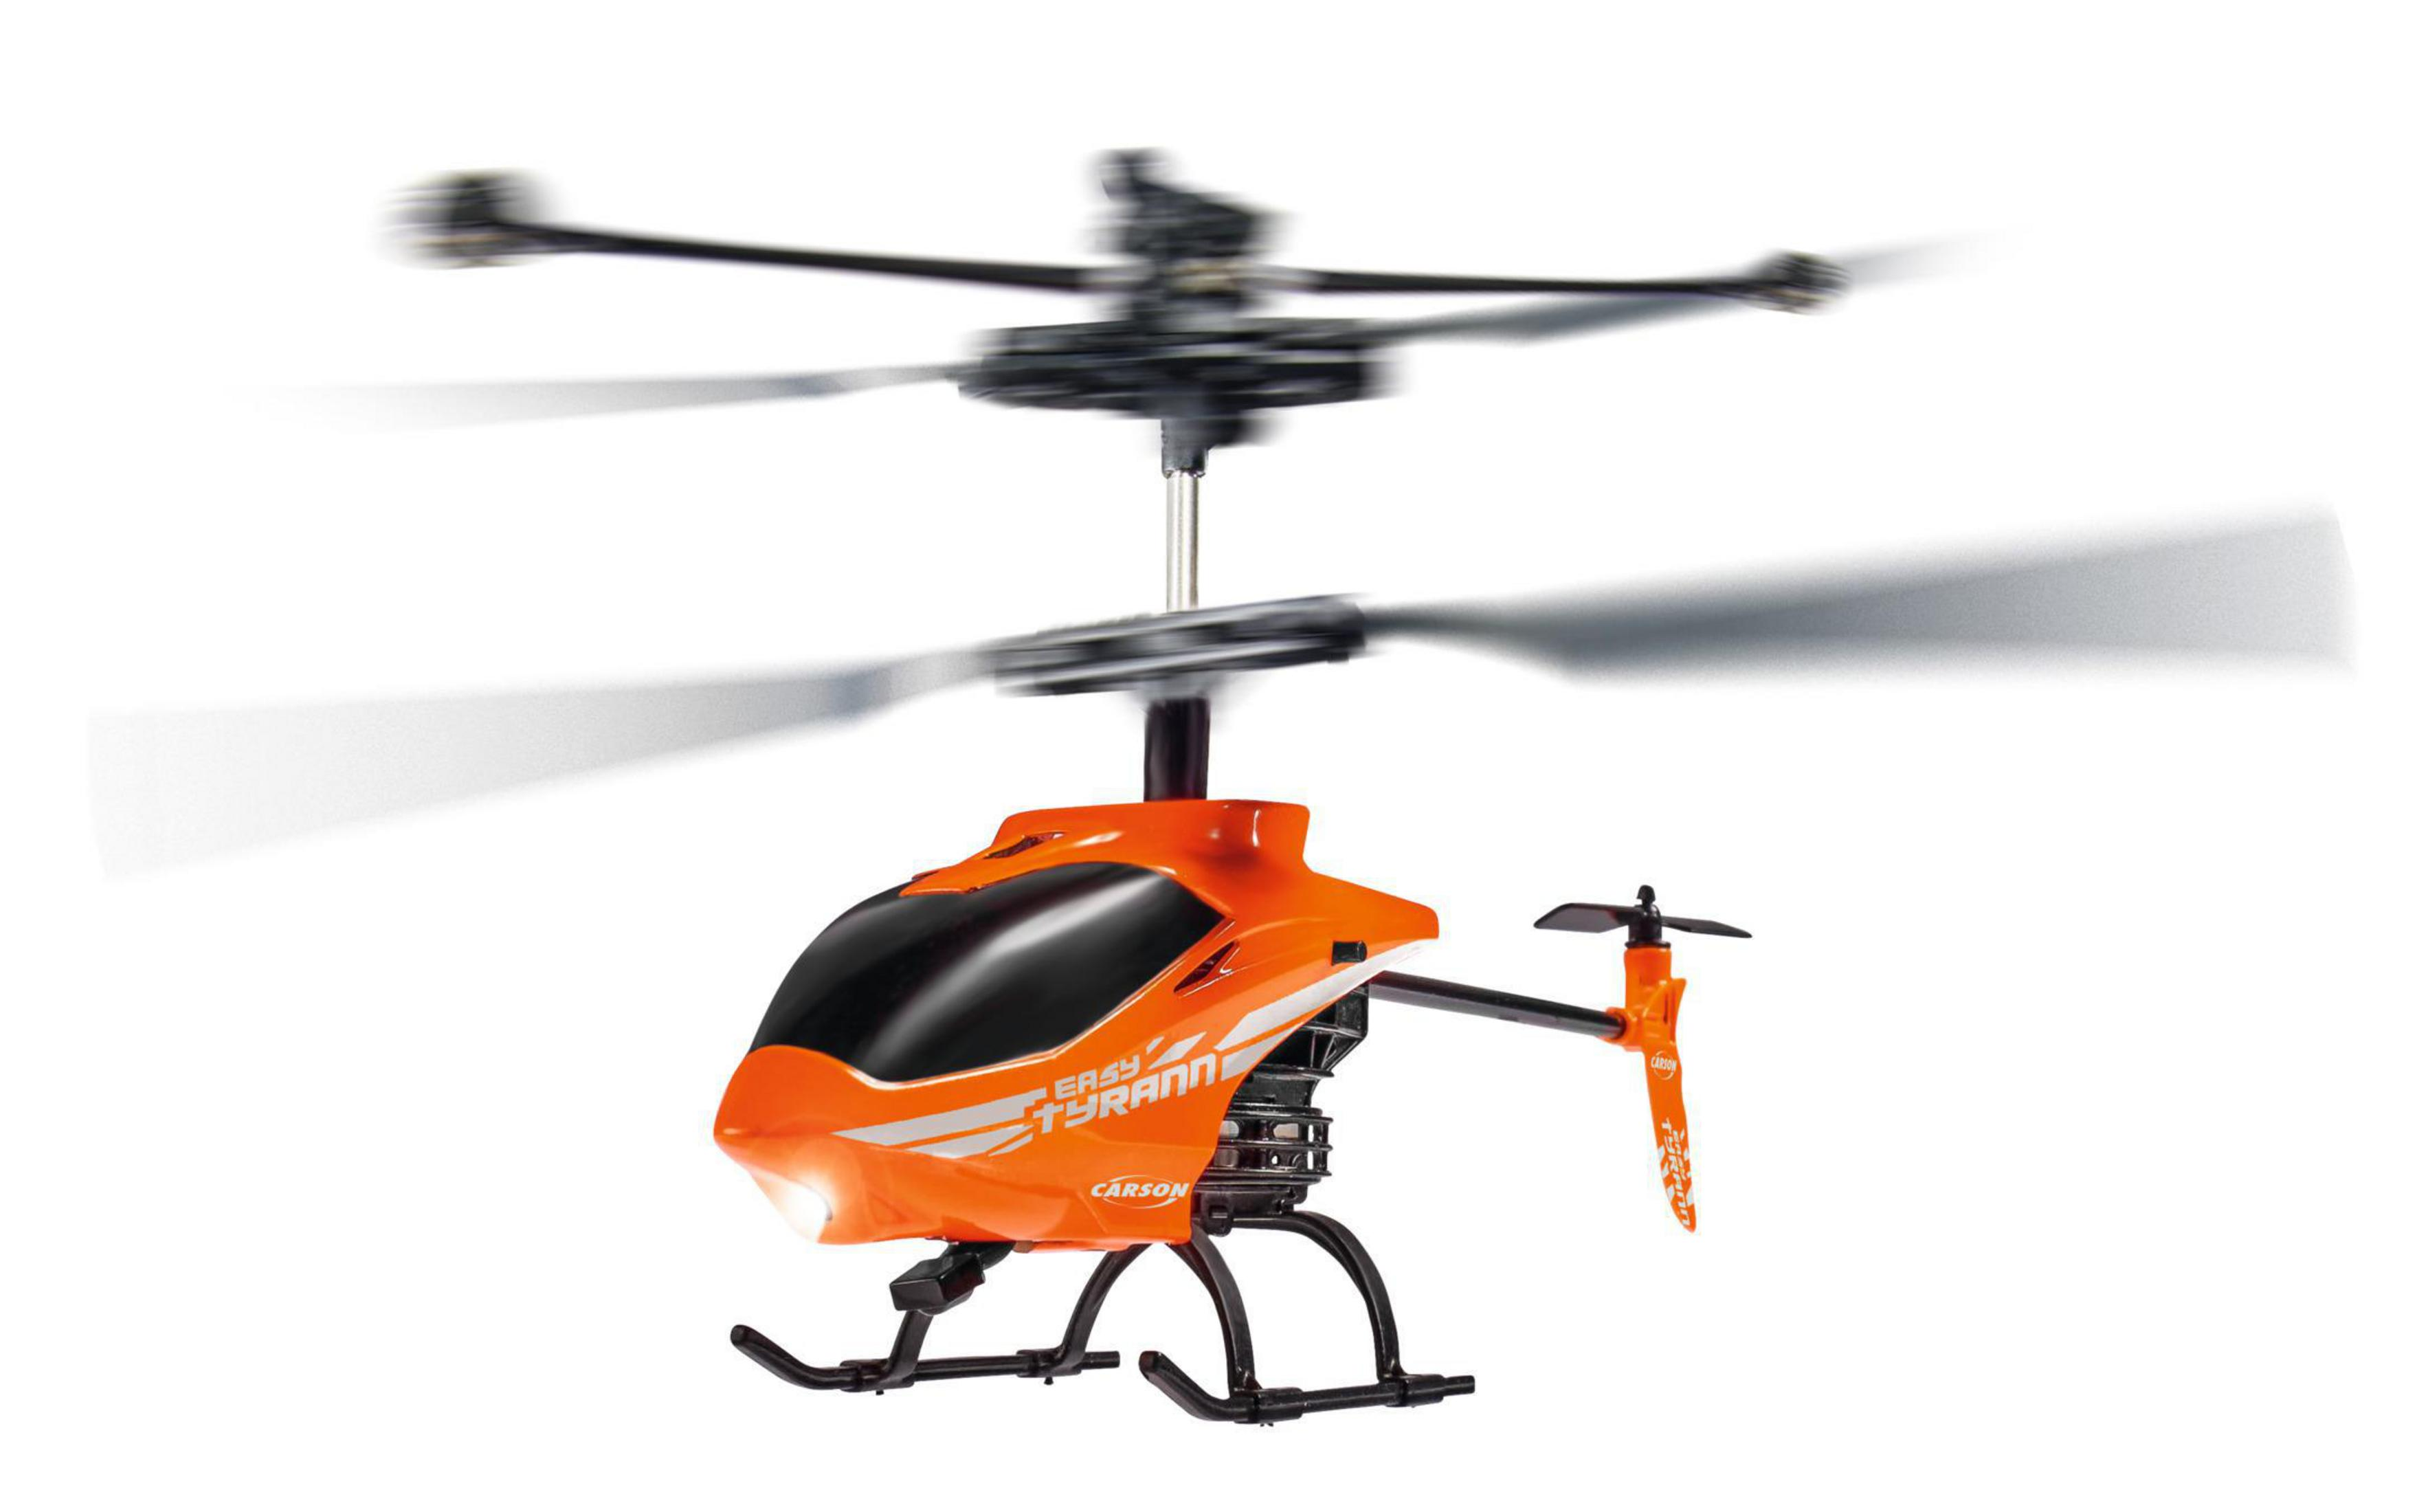 CARSON 500507155 NANO Orange GYRO 2CH TYRANN 230 Helikopter, IR ferngesteuerter